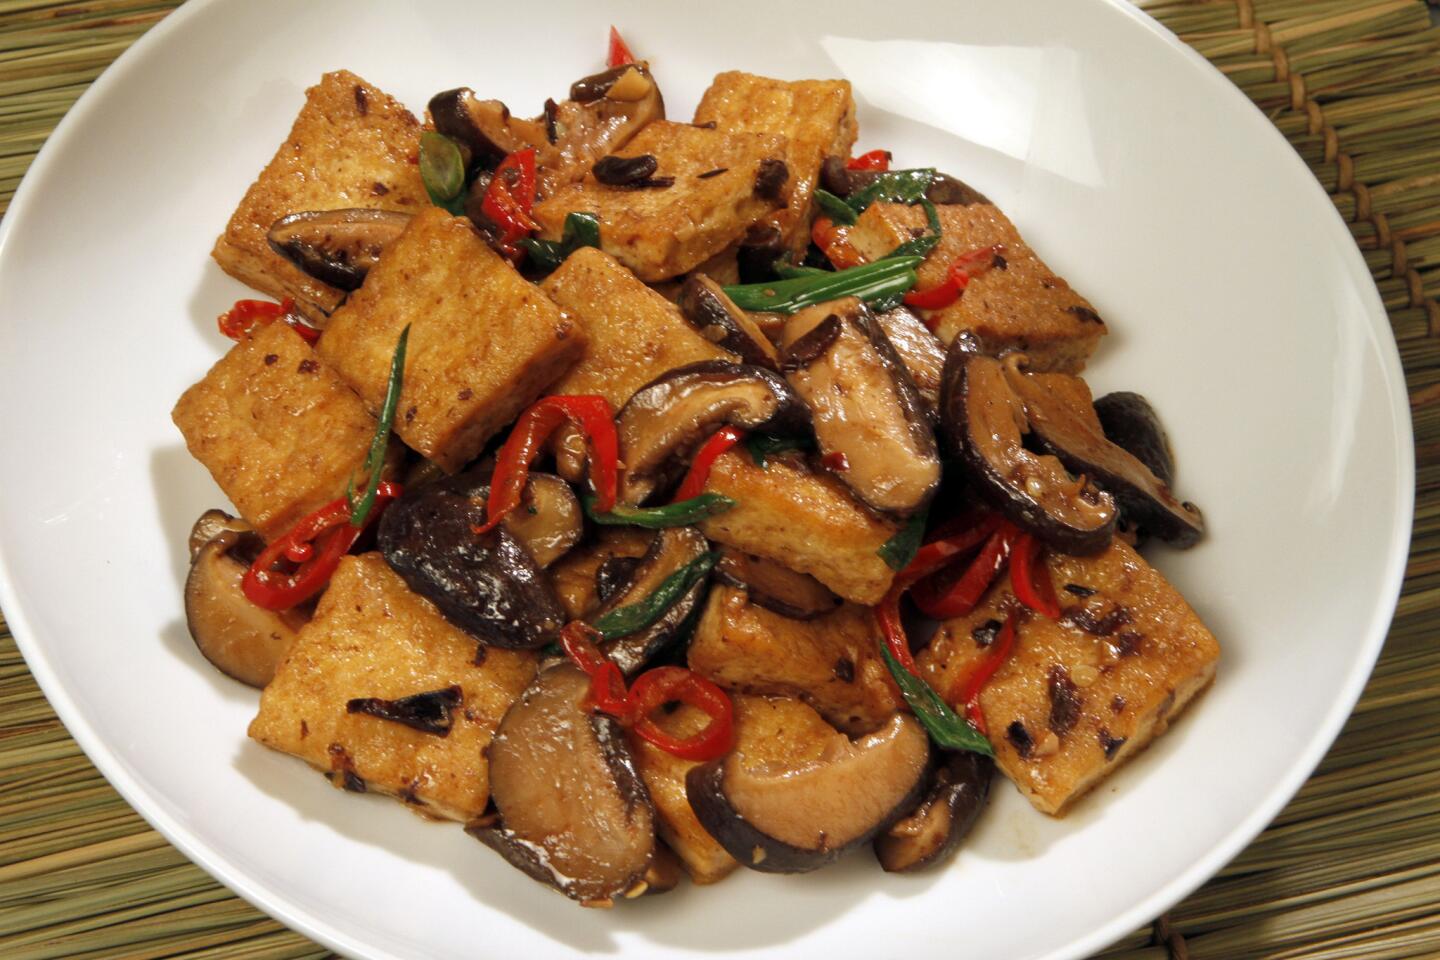 Vegetarian Hunan-style tofu